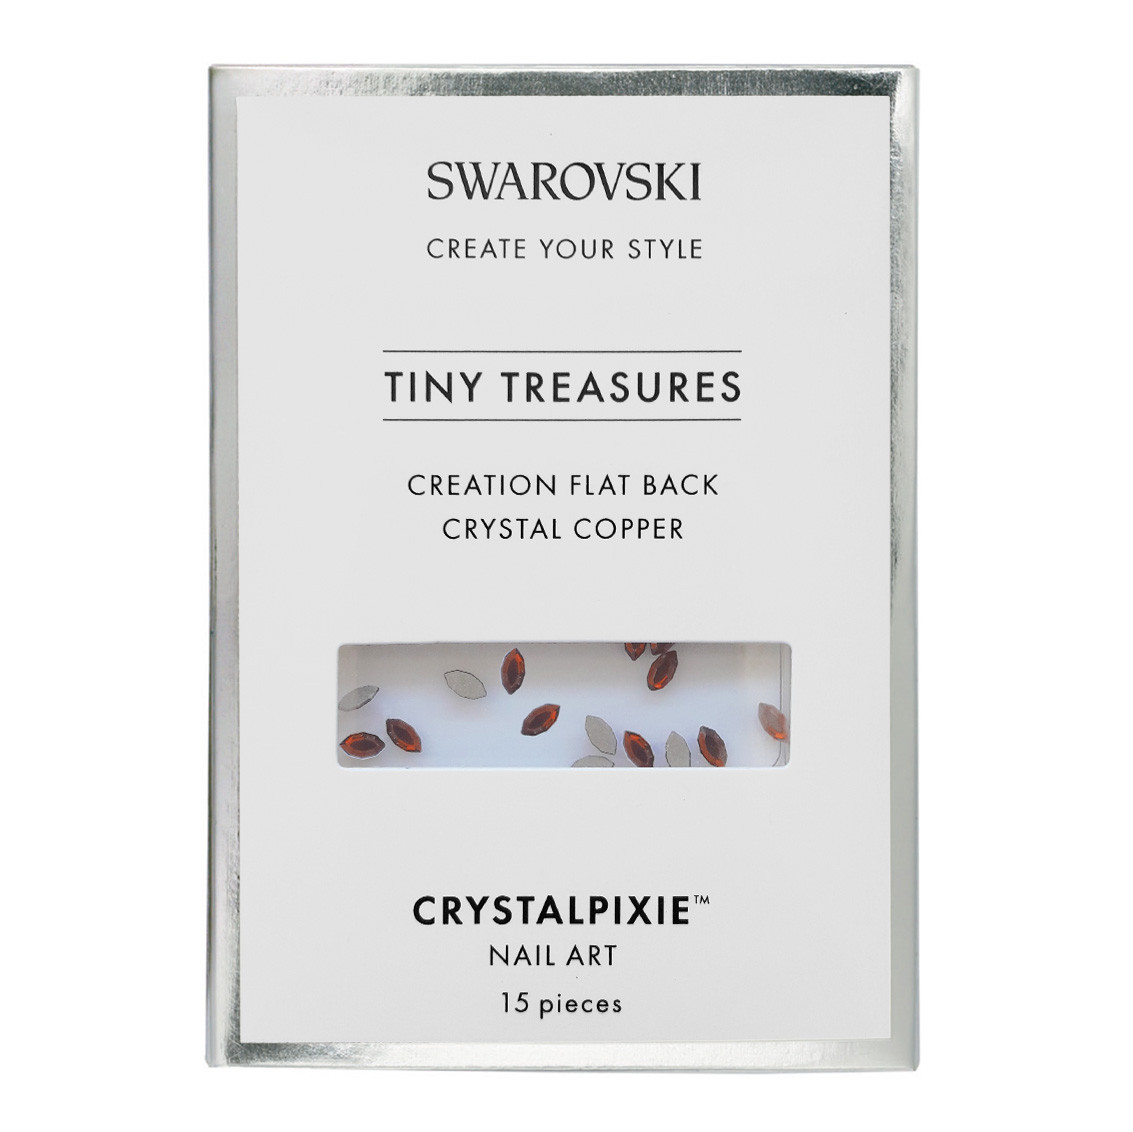 Creation Flat Back - Crystal Copper 20 pcs - Swarovski® Tiny Treasures